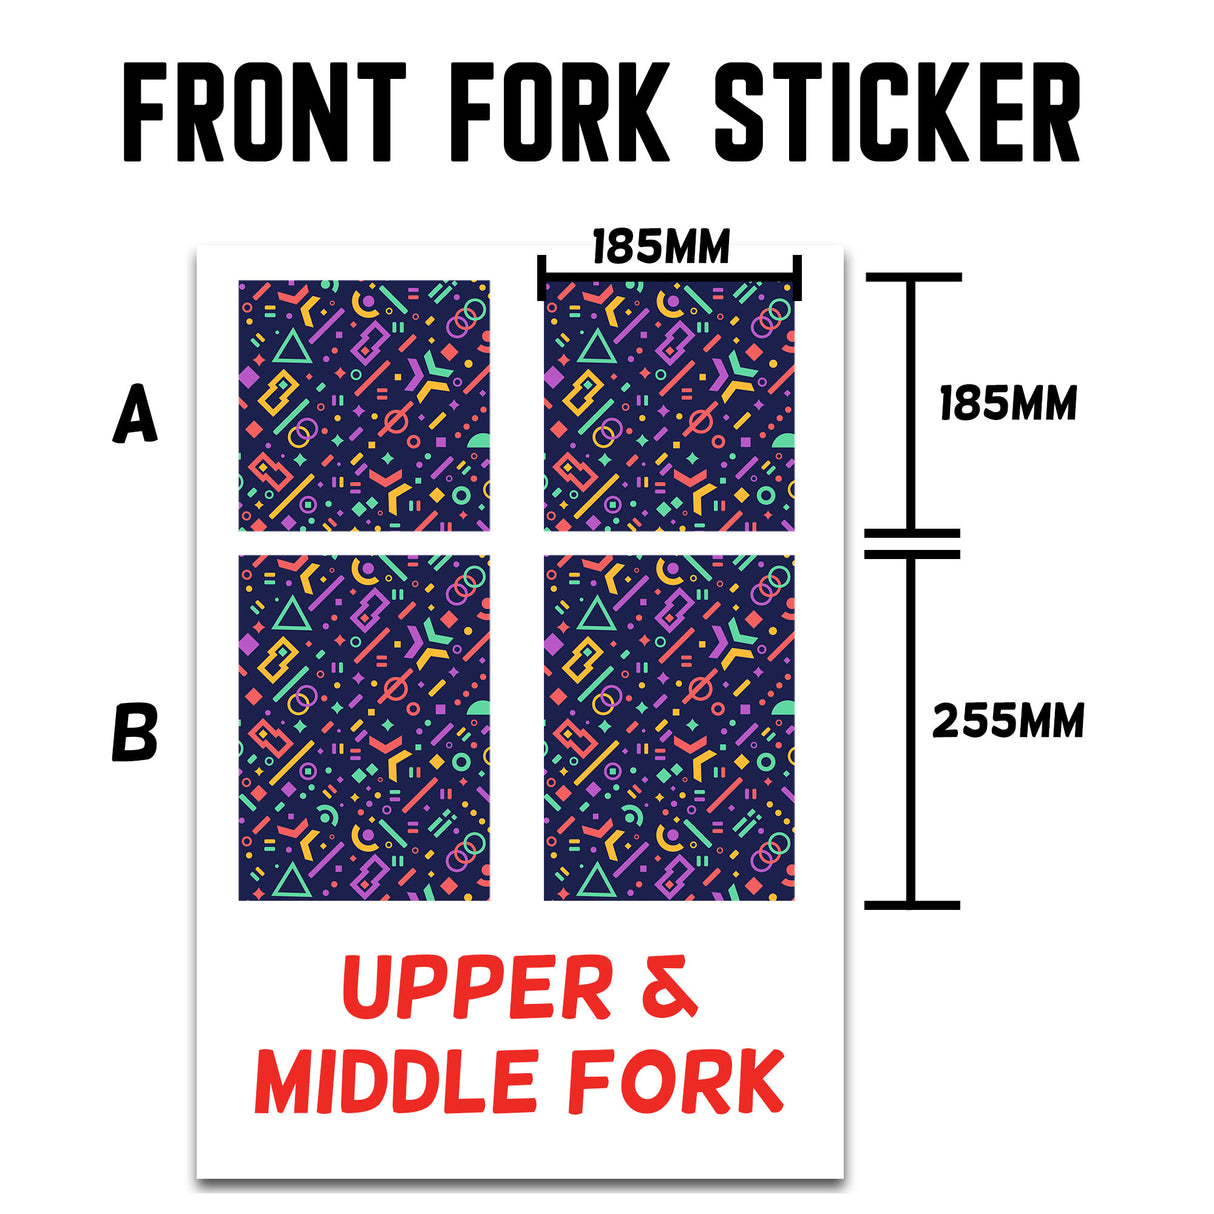 MX Drit Bike Front Fork Wrap Sticker Protection For Honda Yamaha Kawaski Suzuki [TT17 Geometric] - StickerBao Wheel Sticker Store